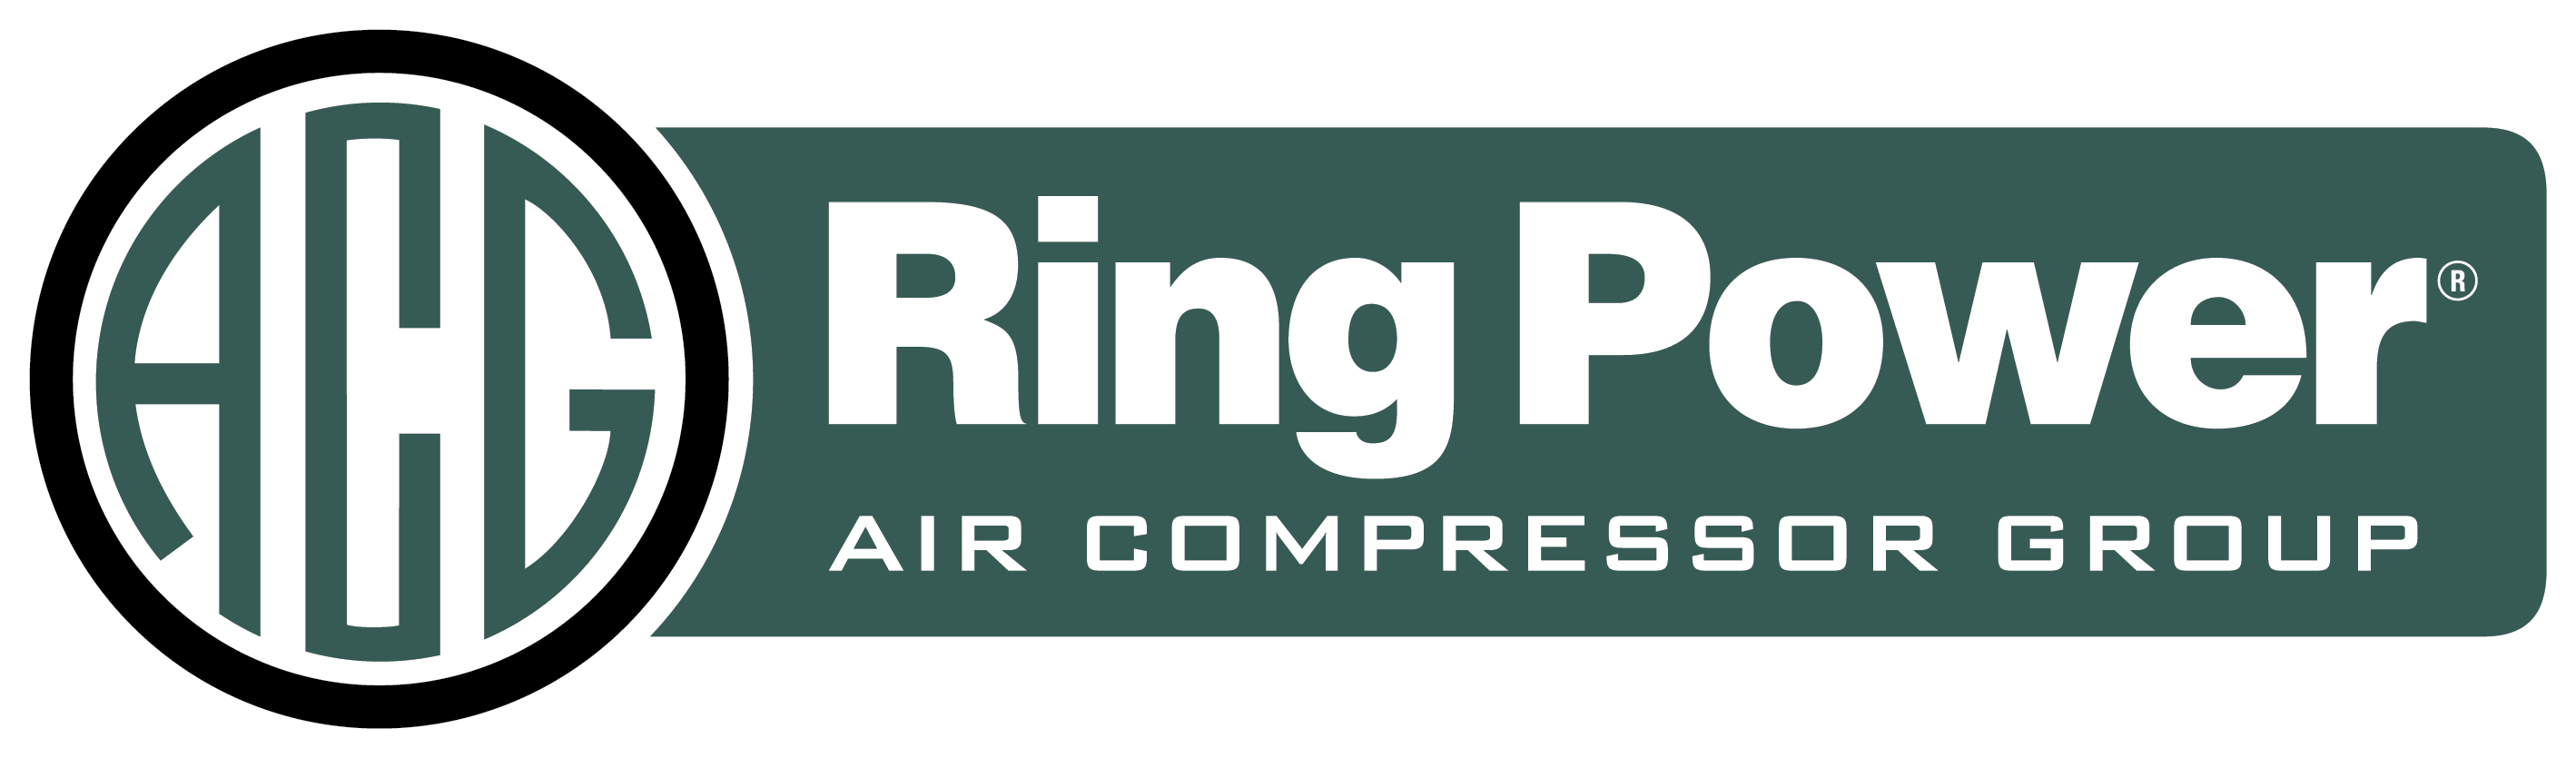 ring power acg logo white